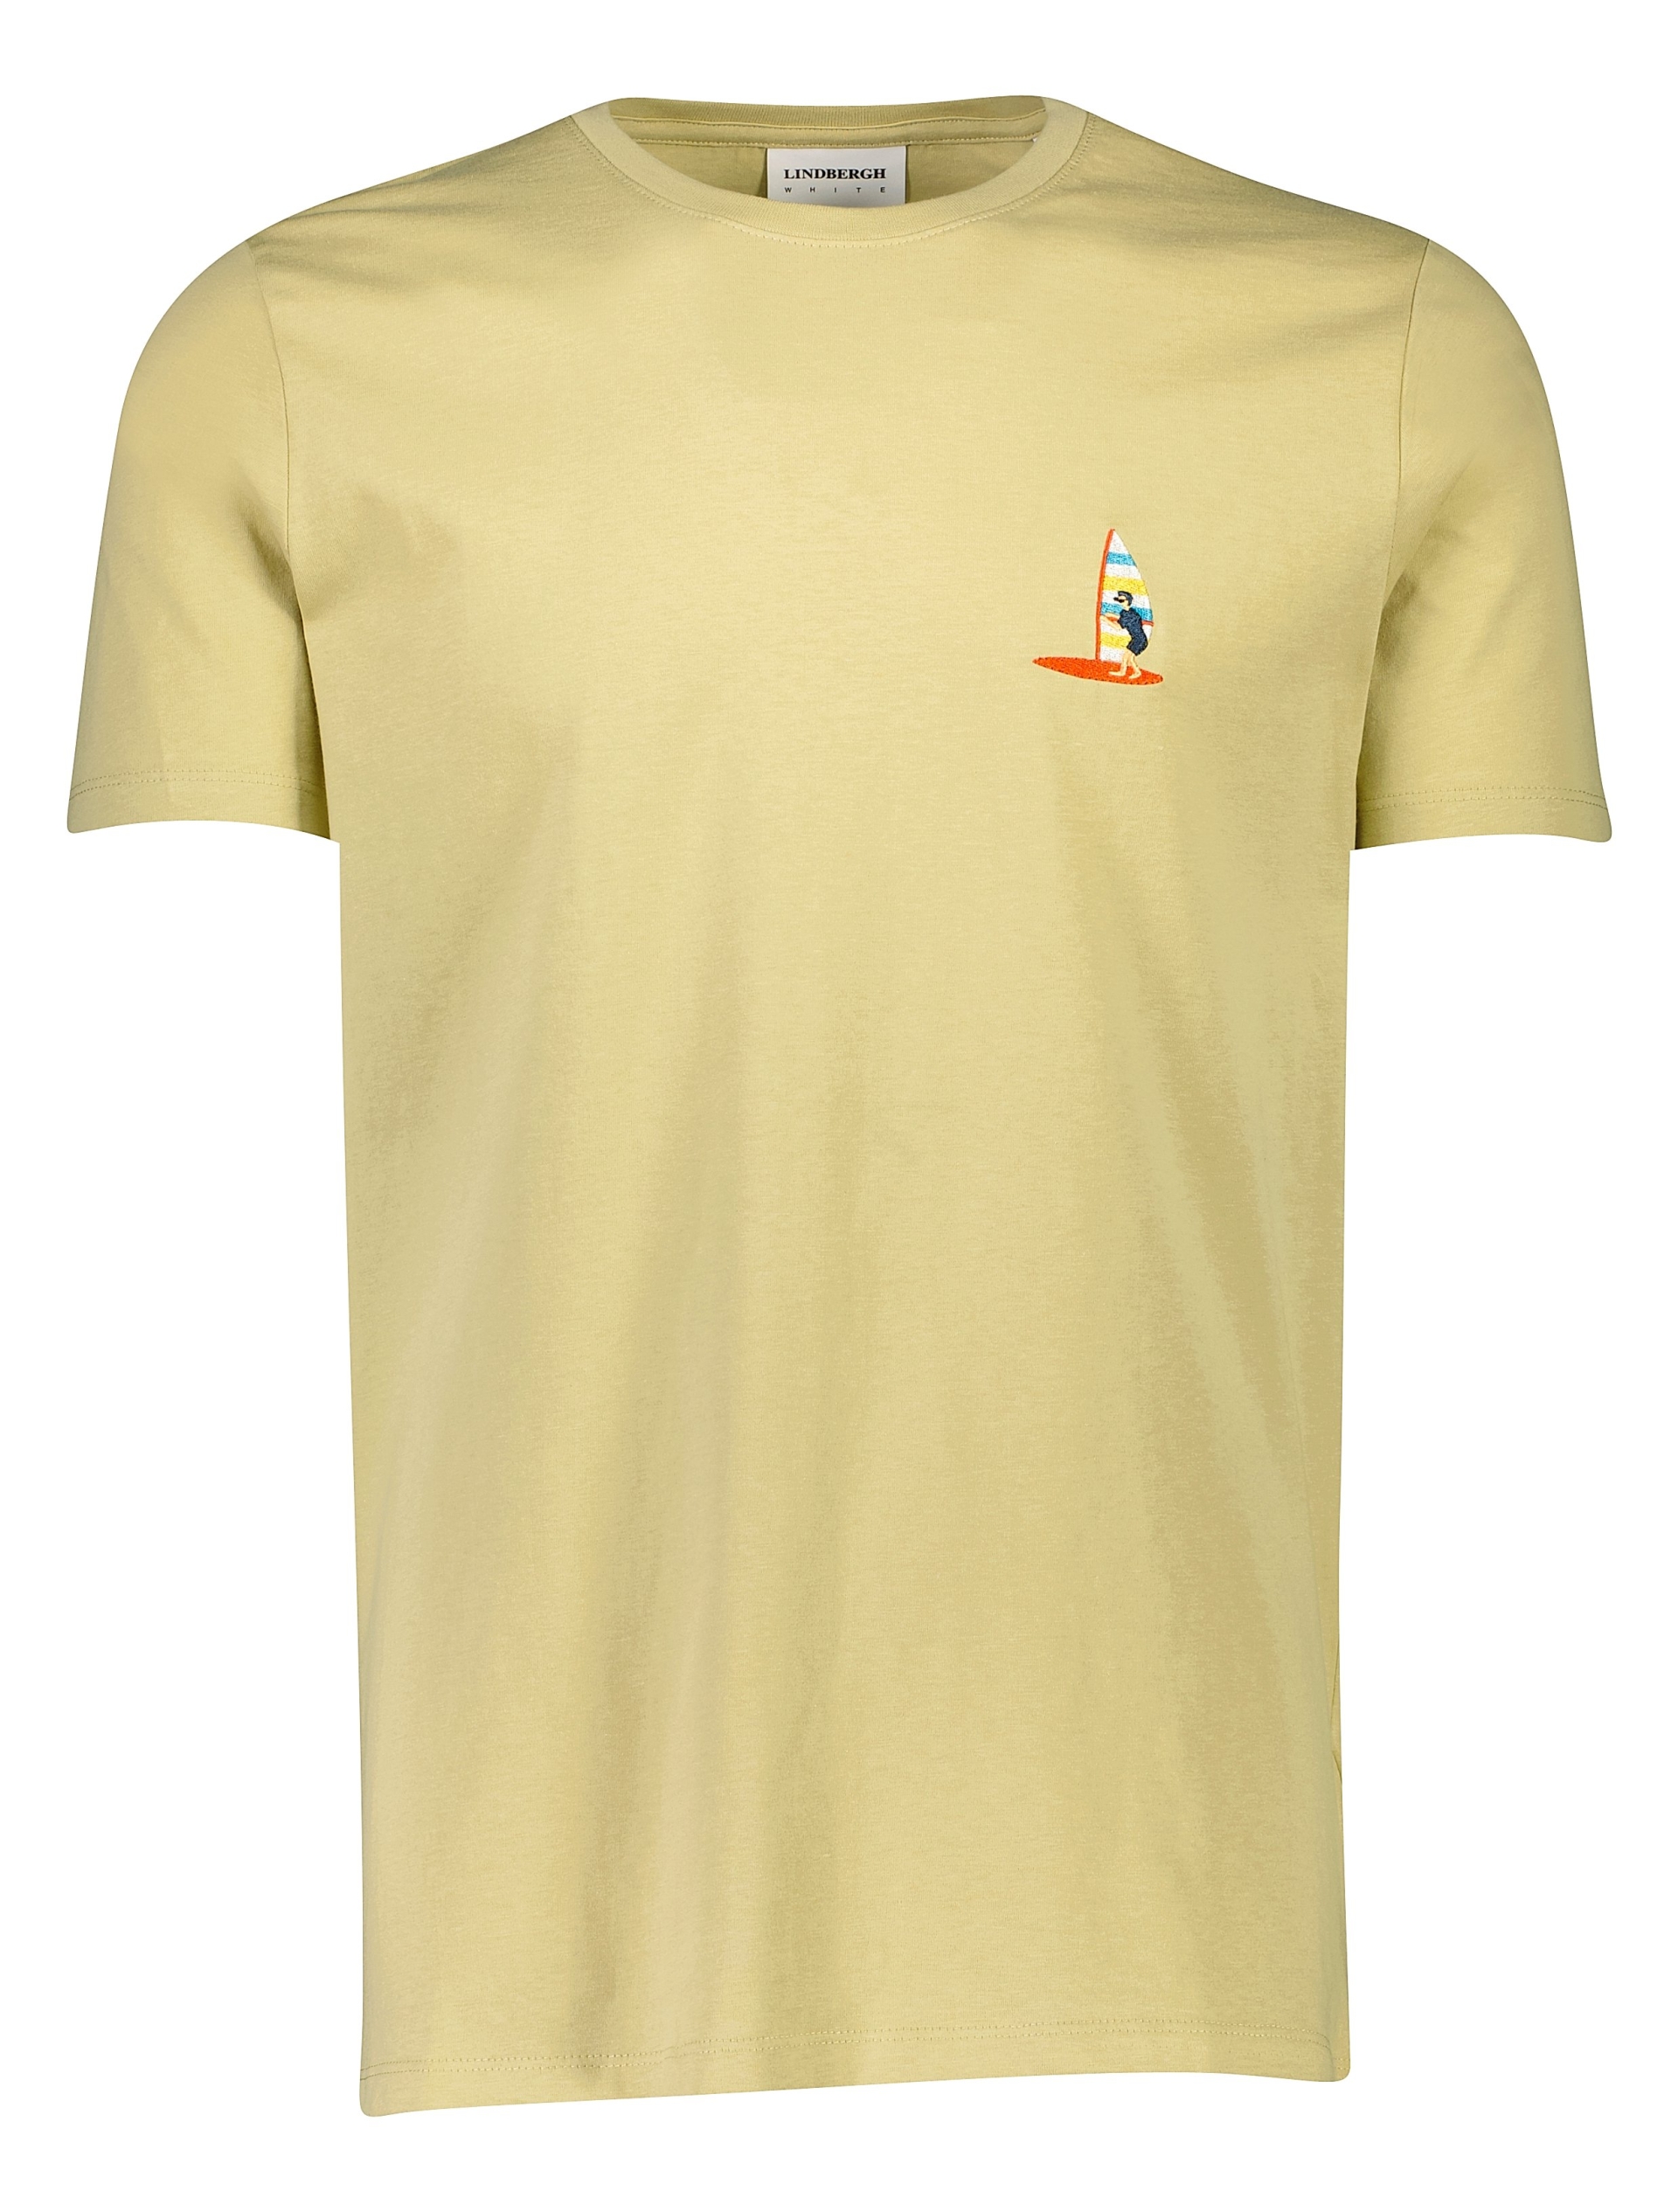 Lindbergh T-Shirt sand / sand